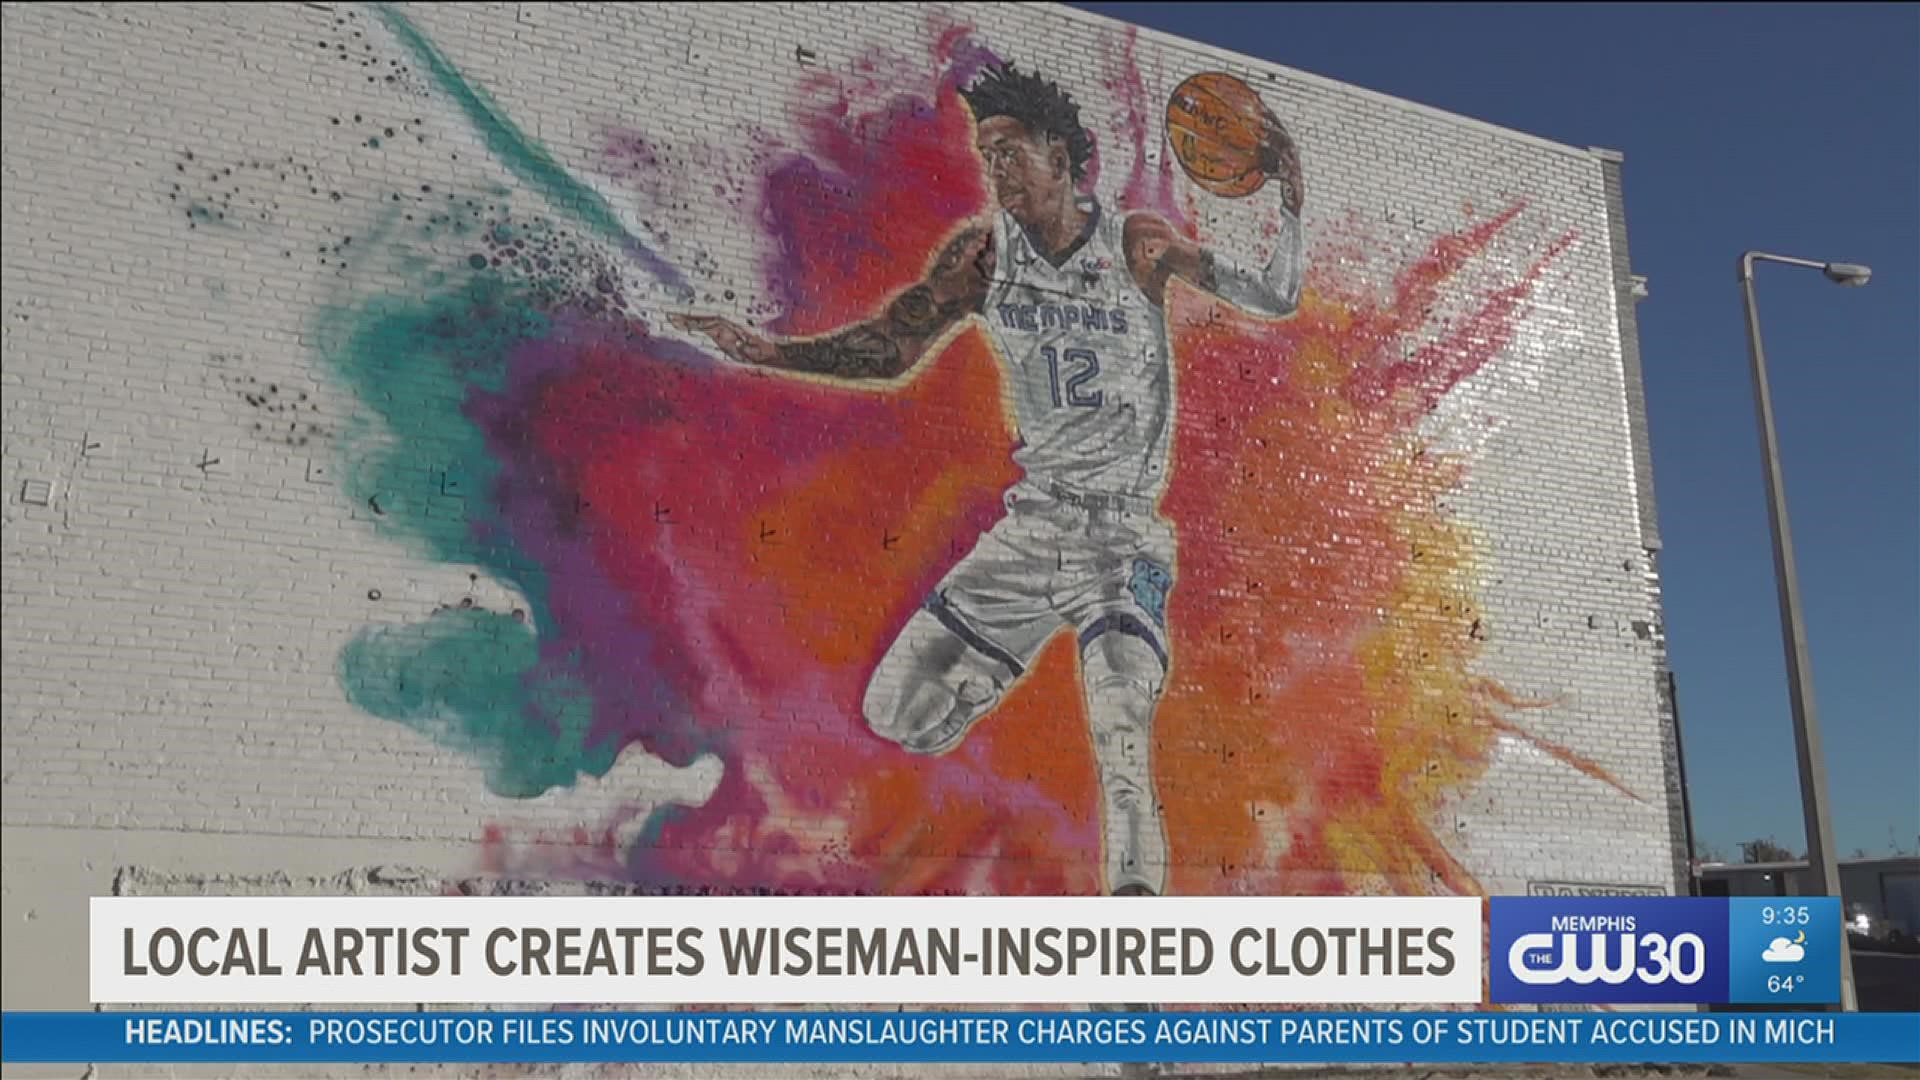 James Wiseman Art  Golden state warriors wallpaper, Warriors wallpaper,  Wiseman